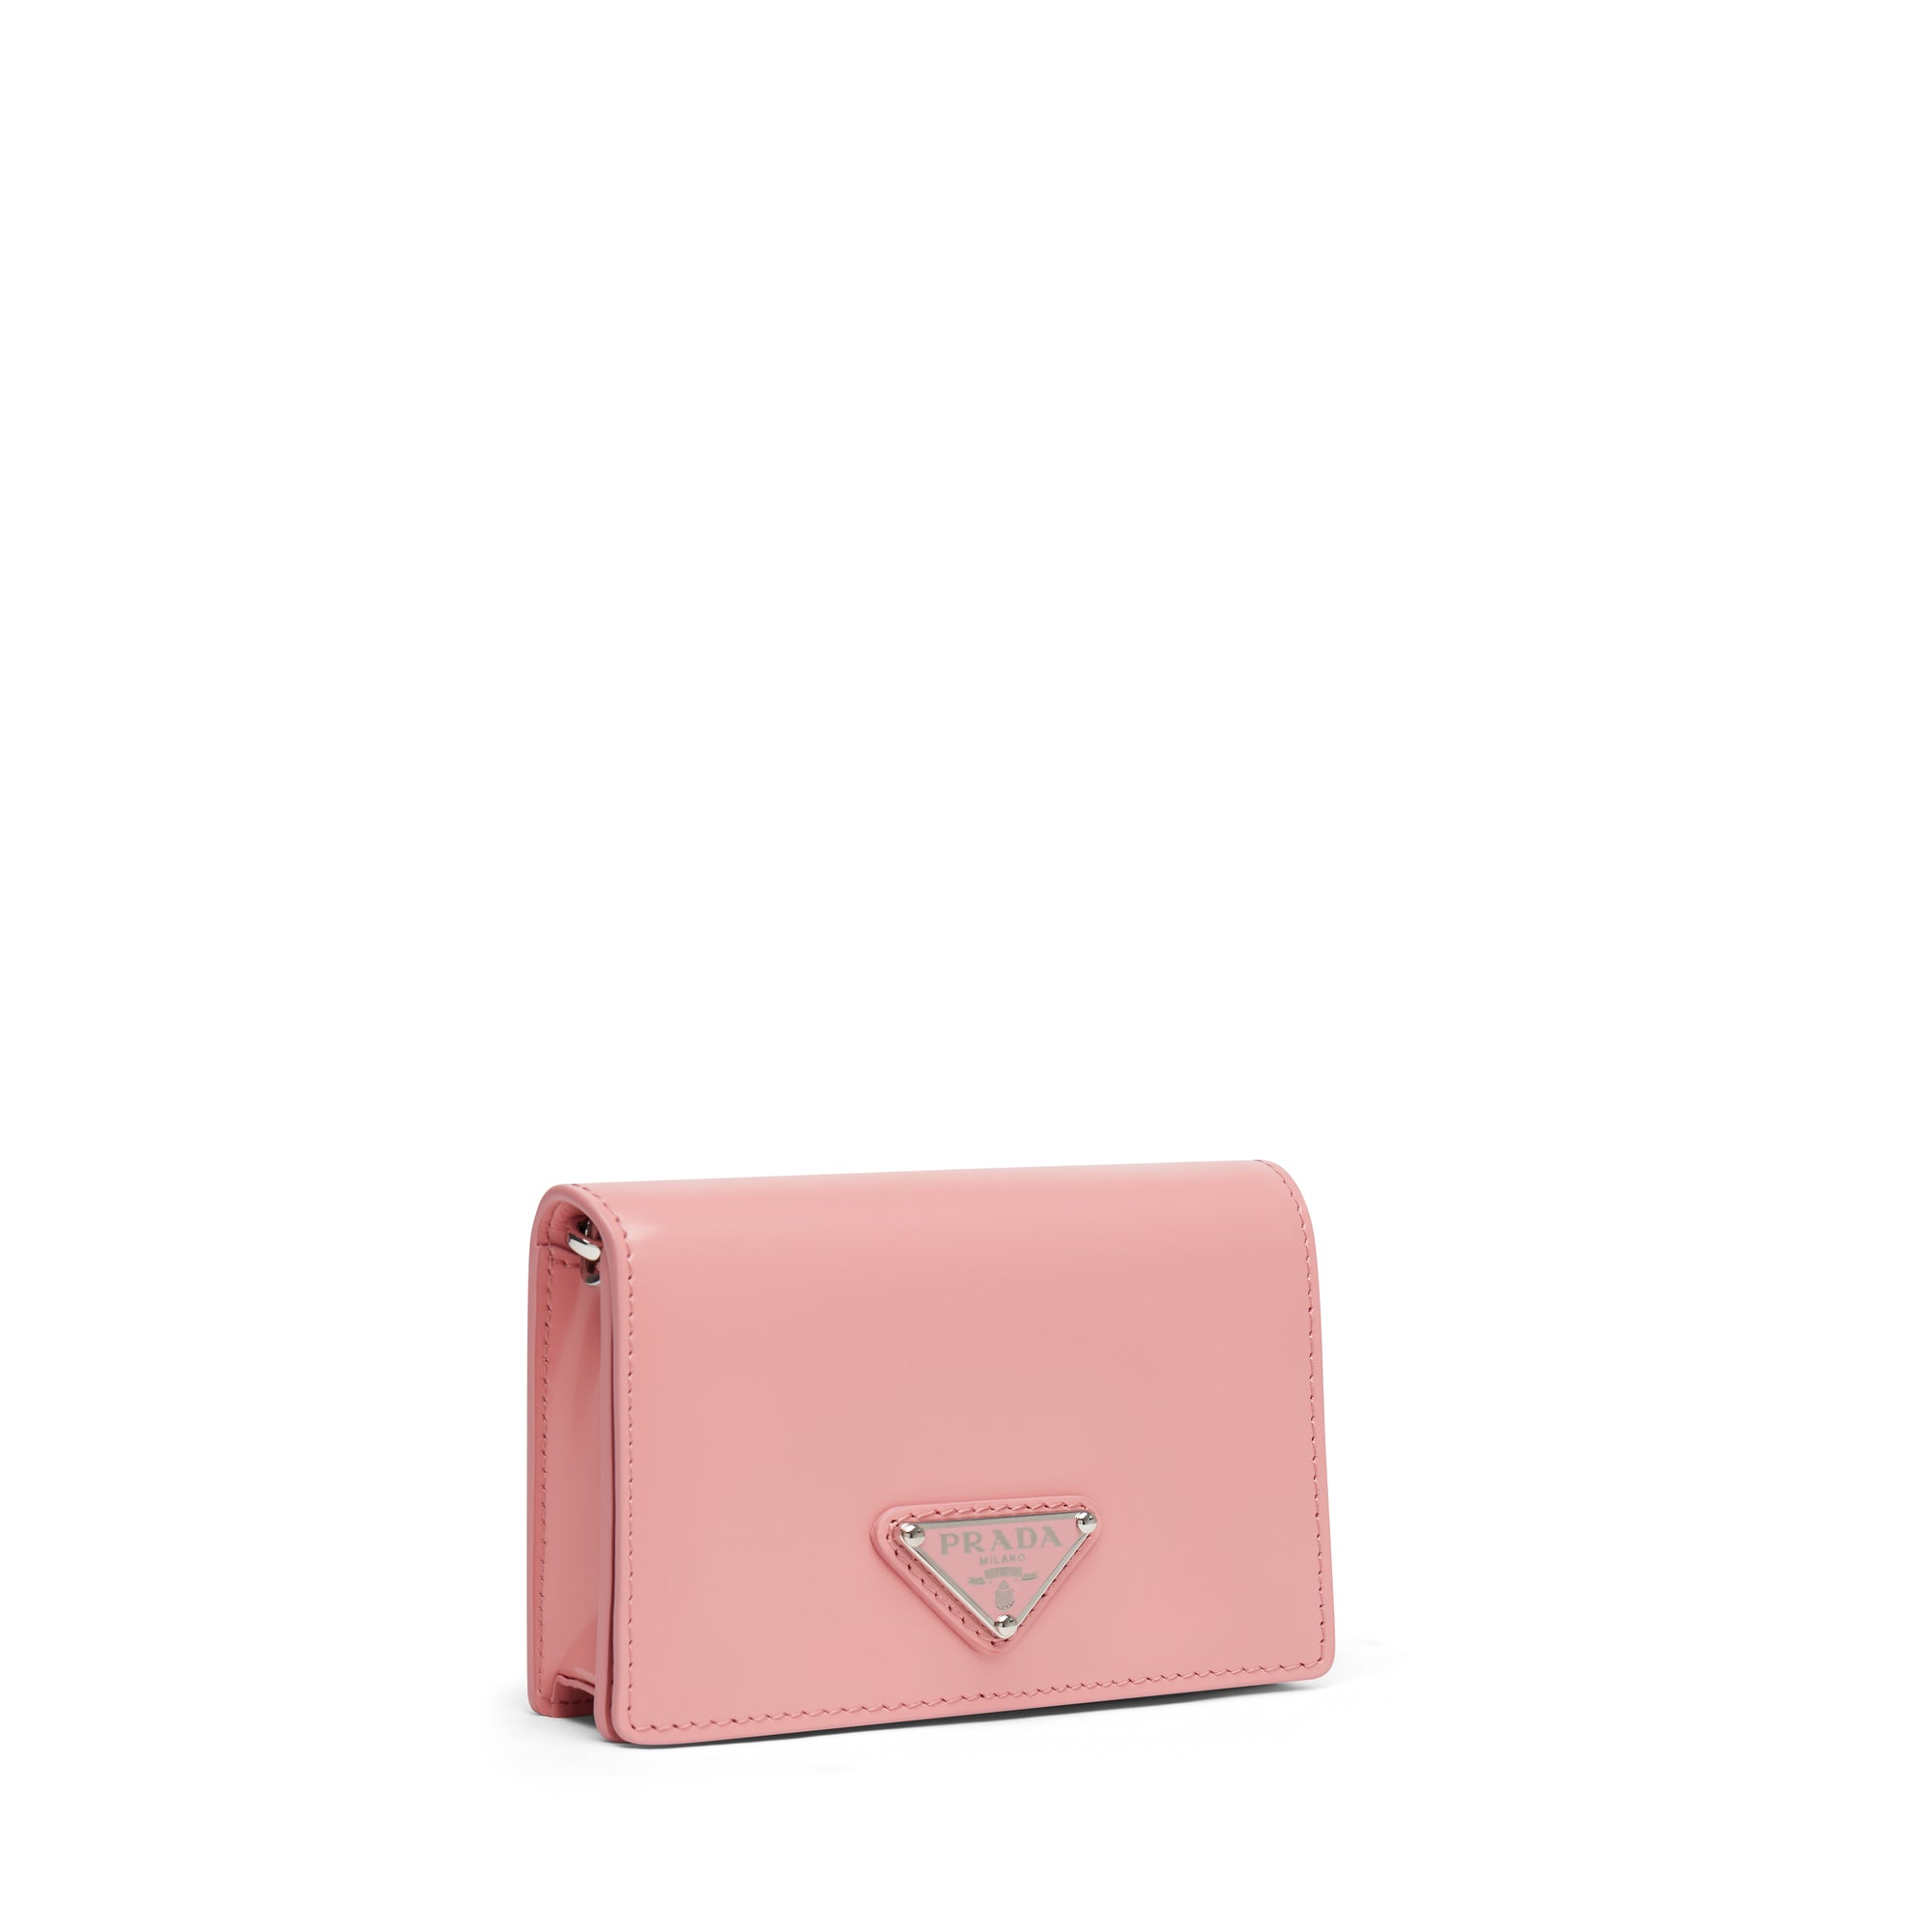 Prada - Women’s Card Holder with Shoulder Strap - (Pink) view 2